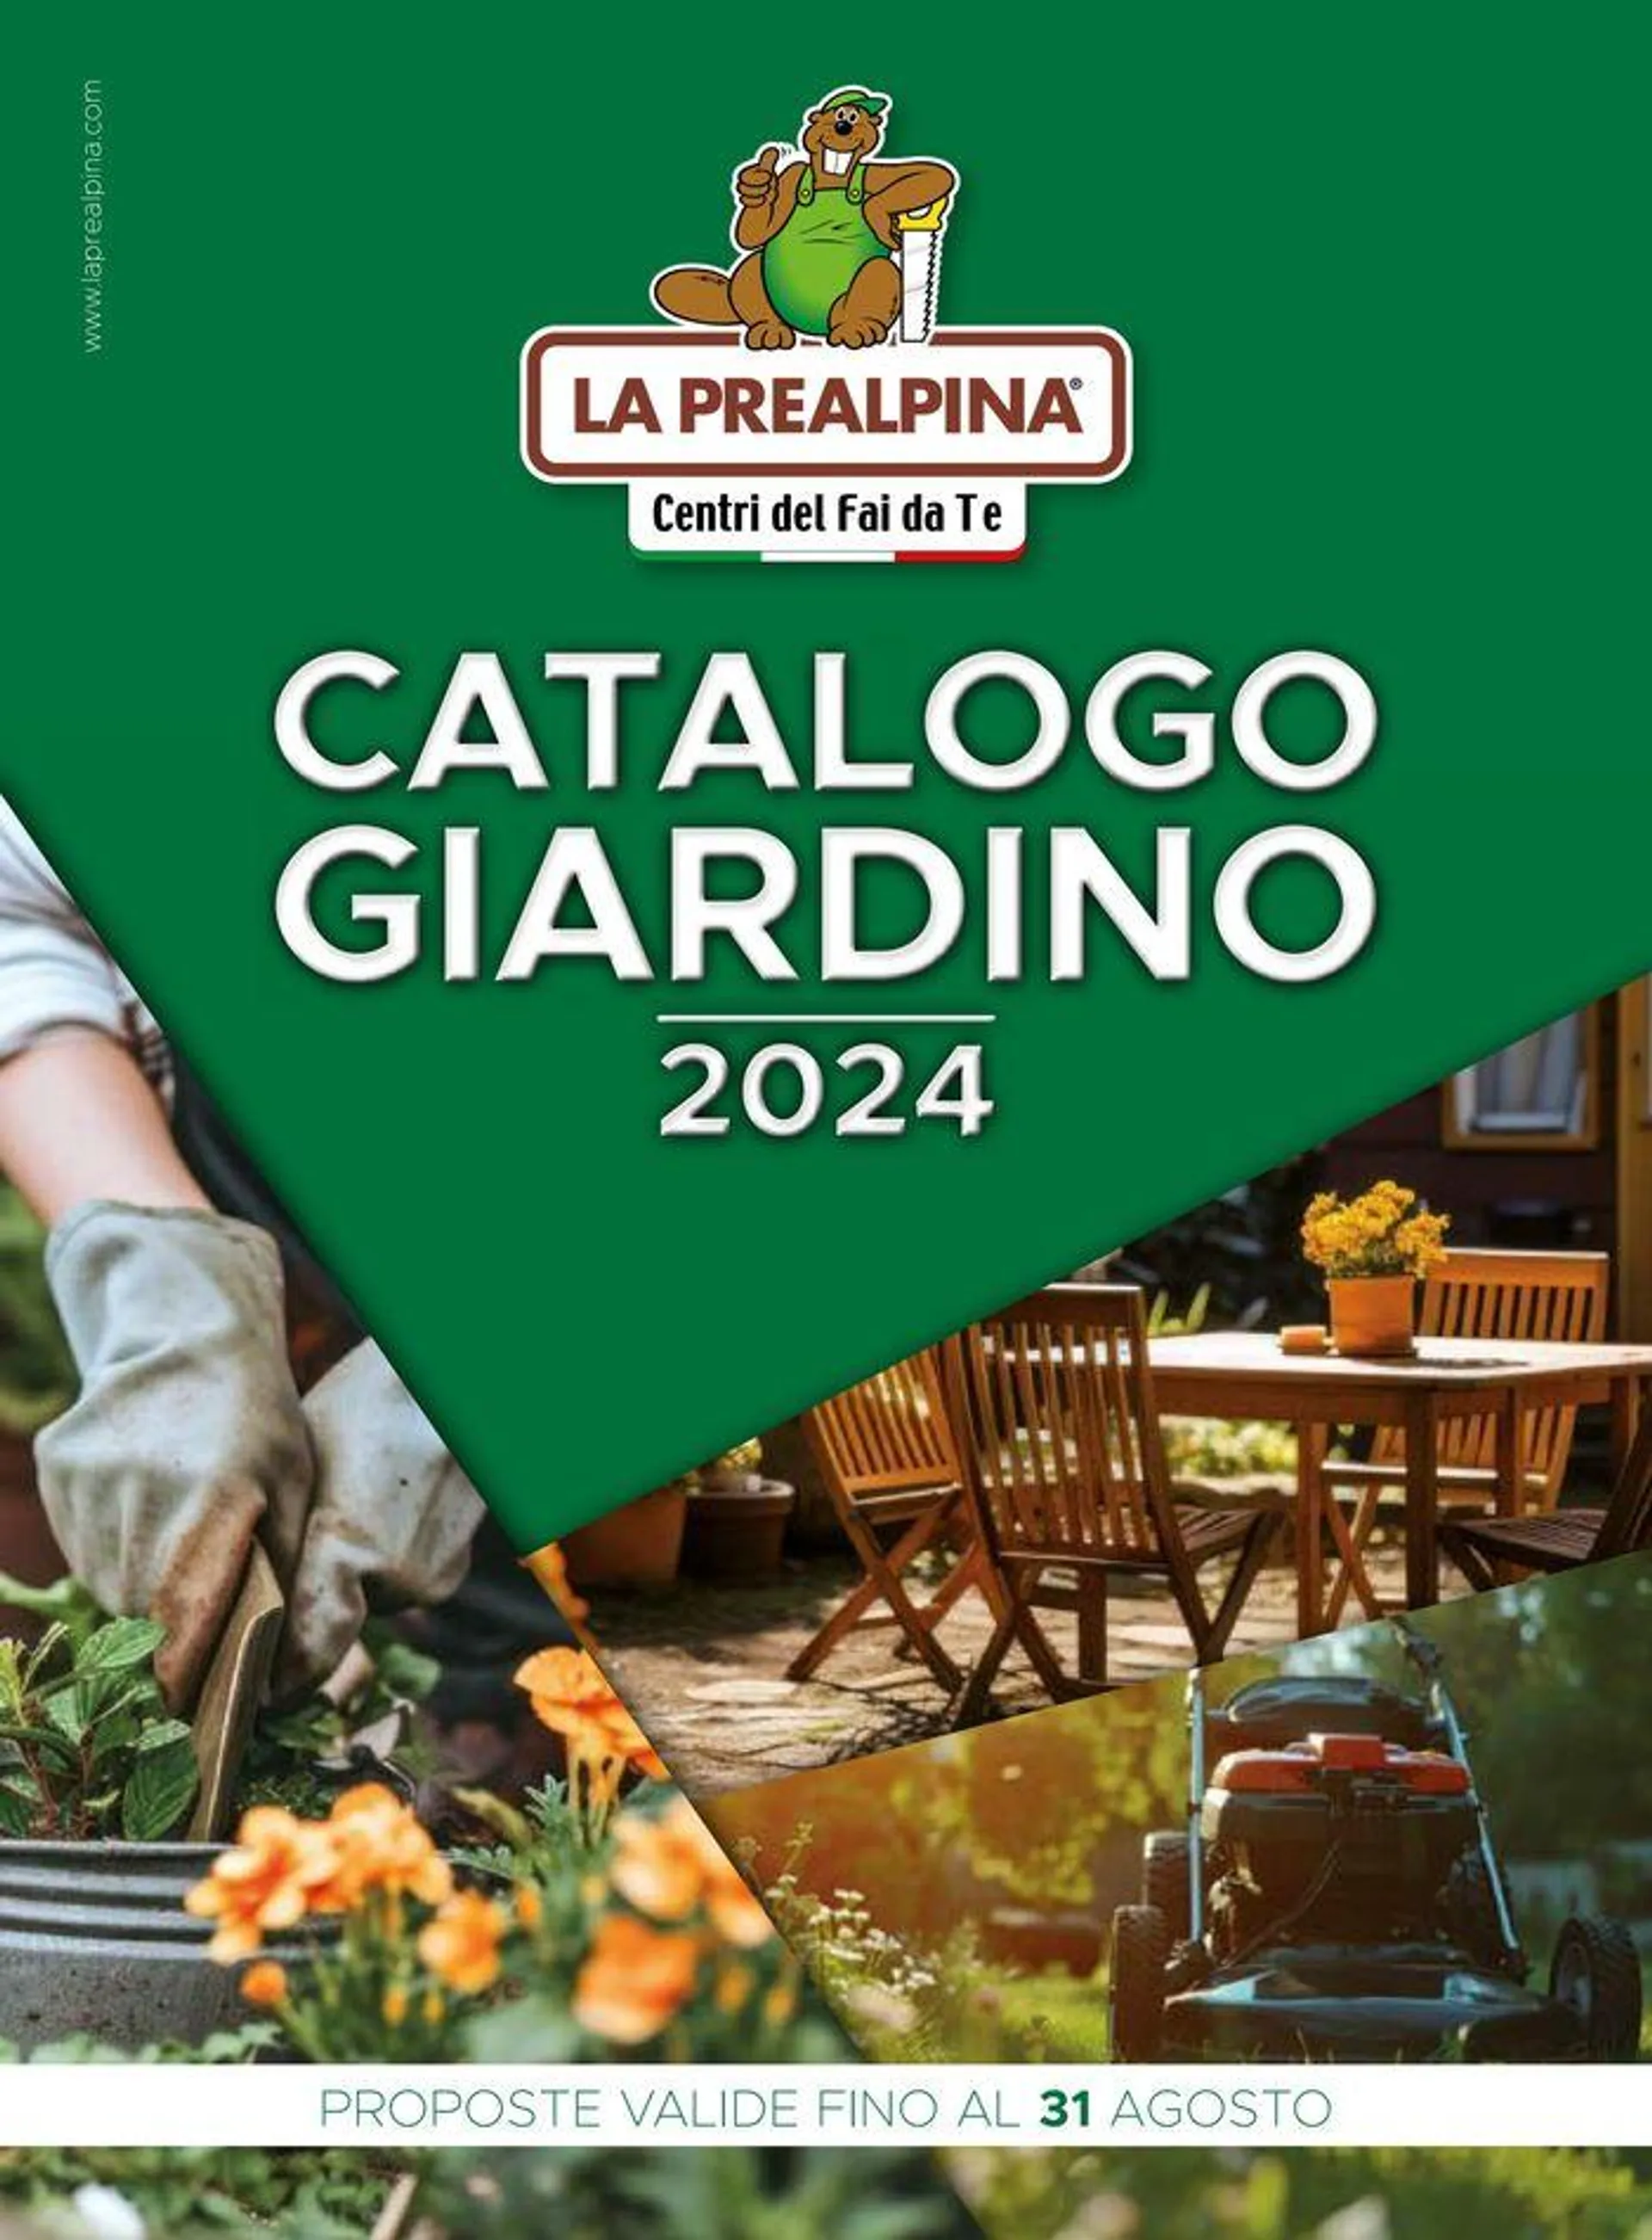 Catalogo giardino 2024 - 1